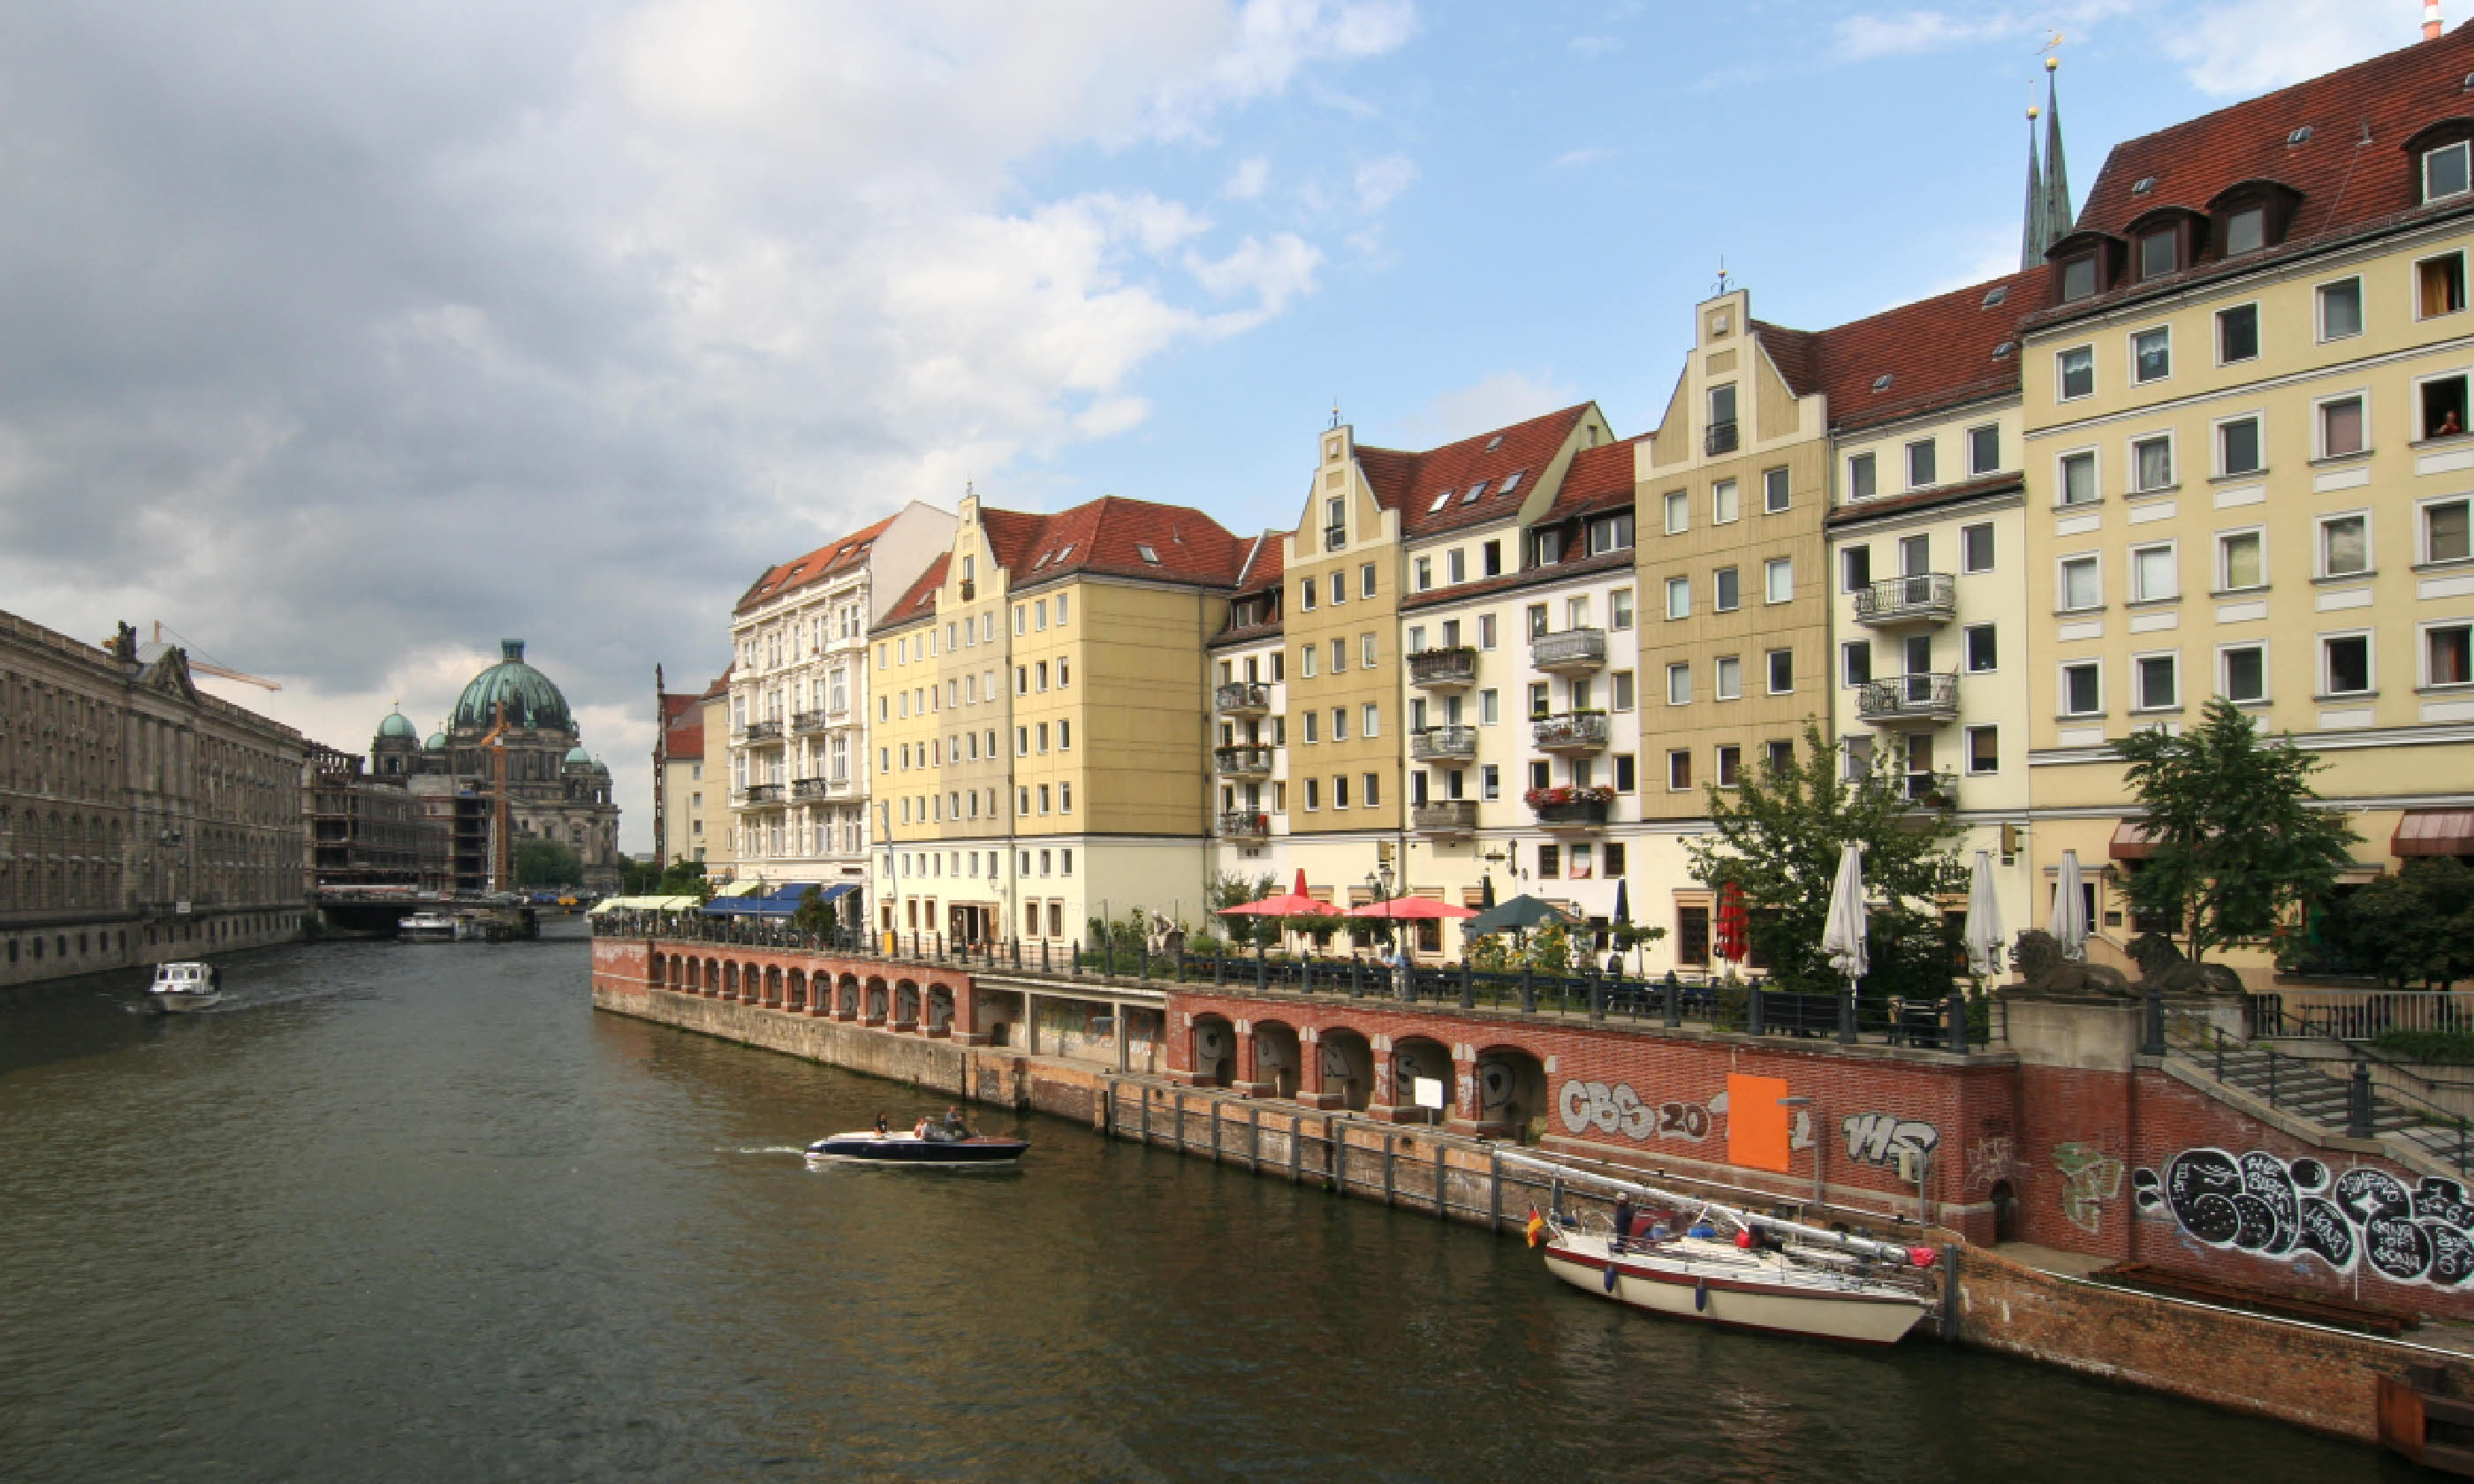 Spree river, with Berliner Dom (Shutterstock)